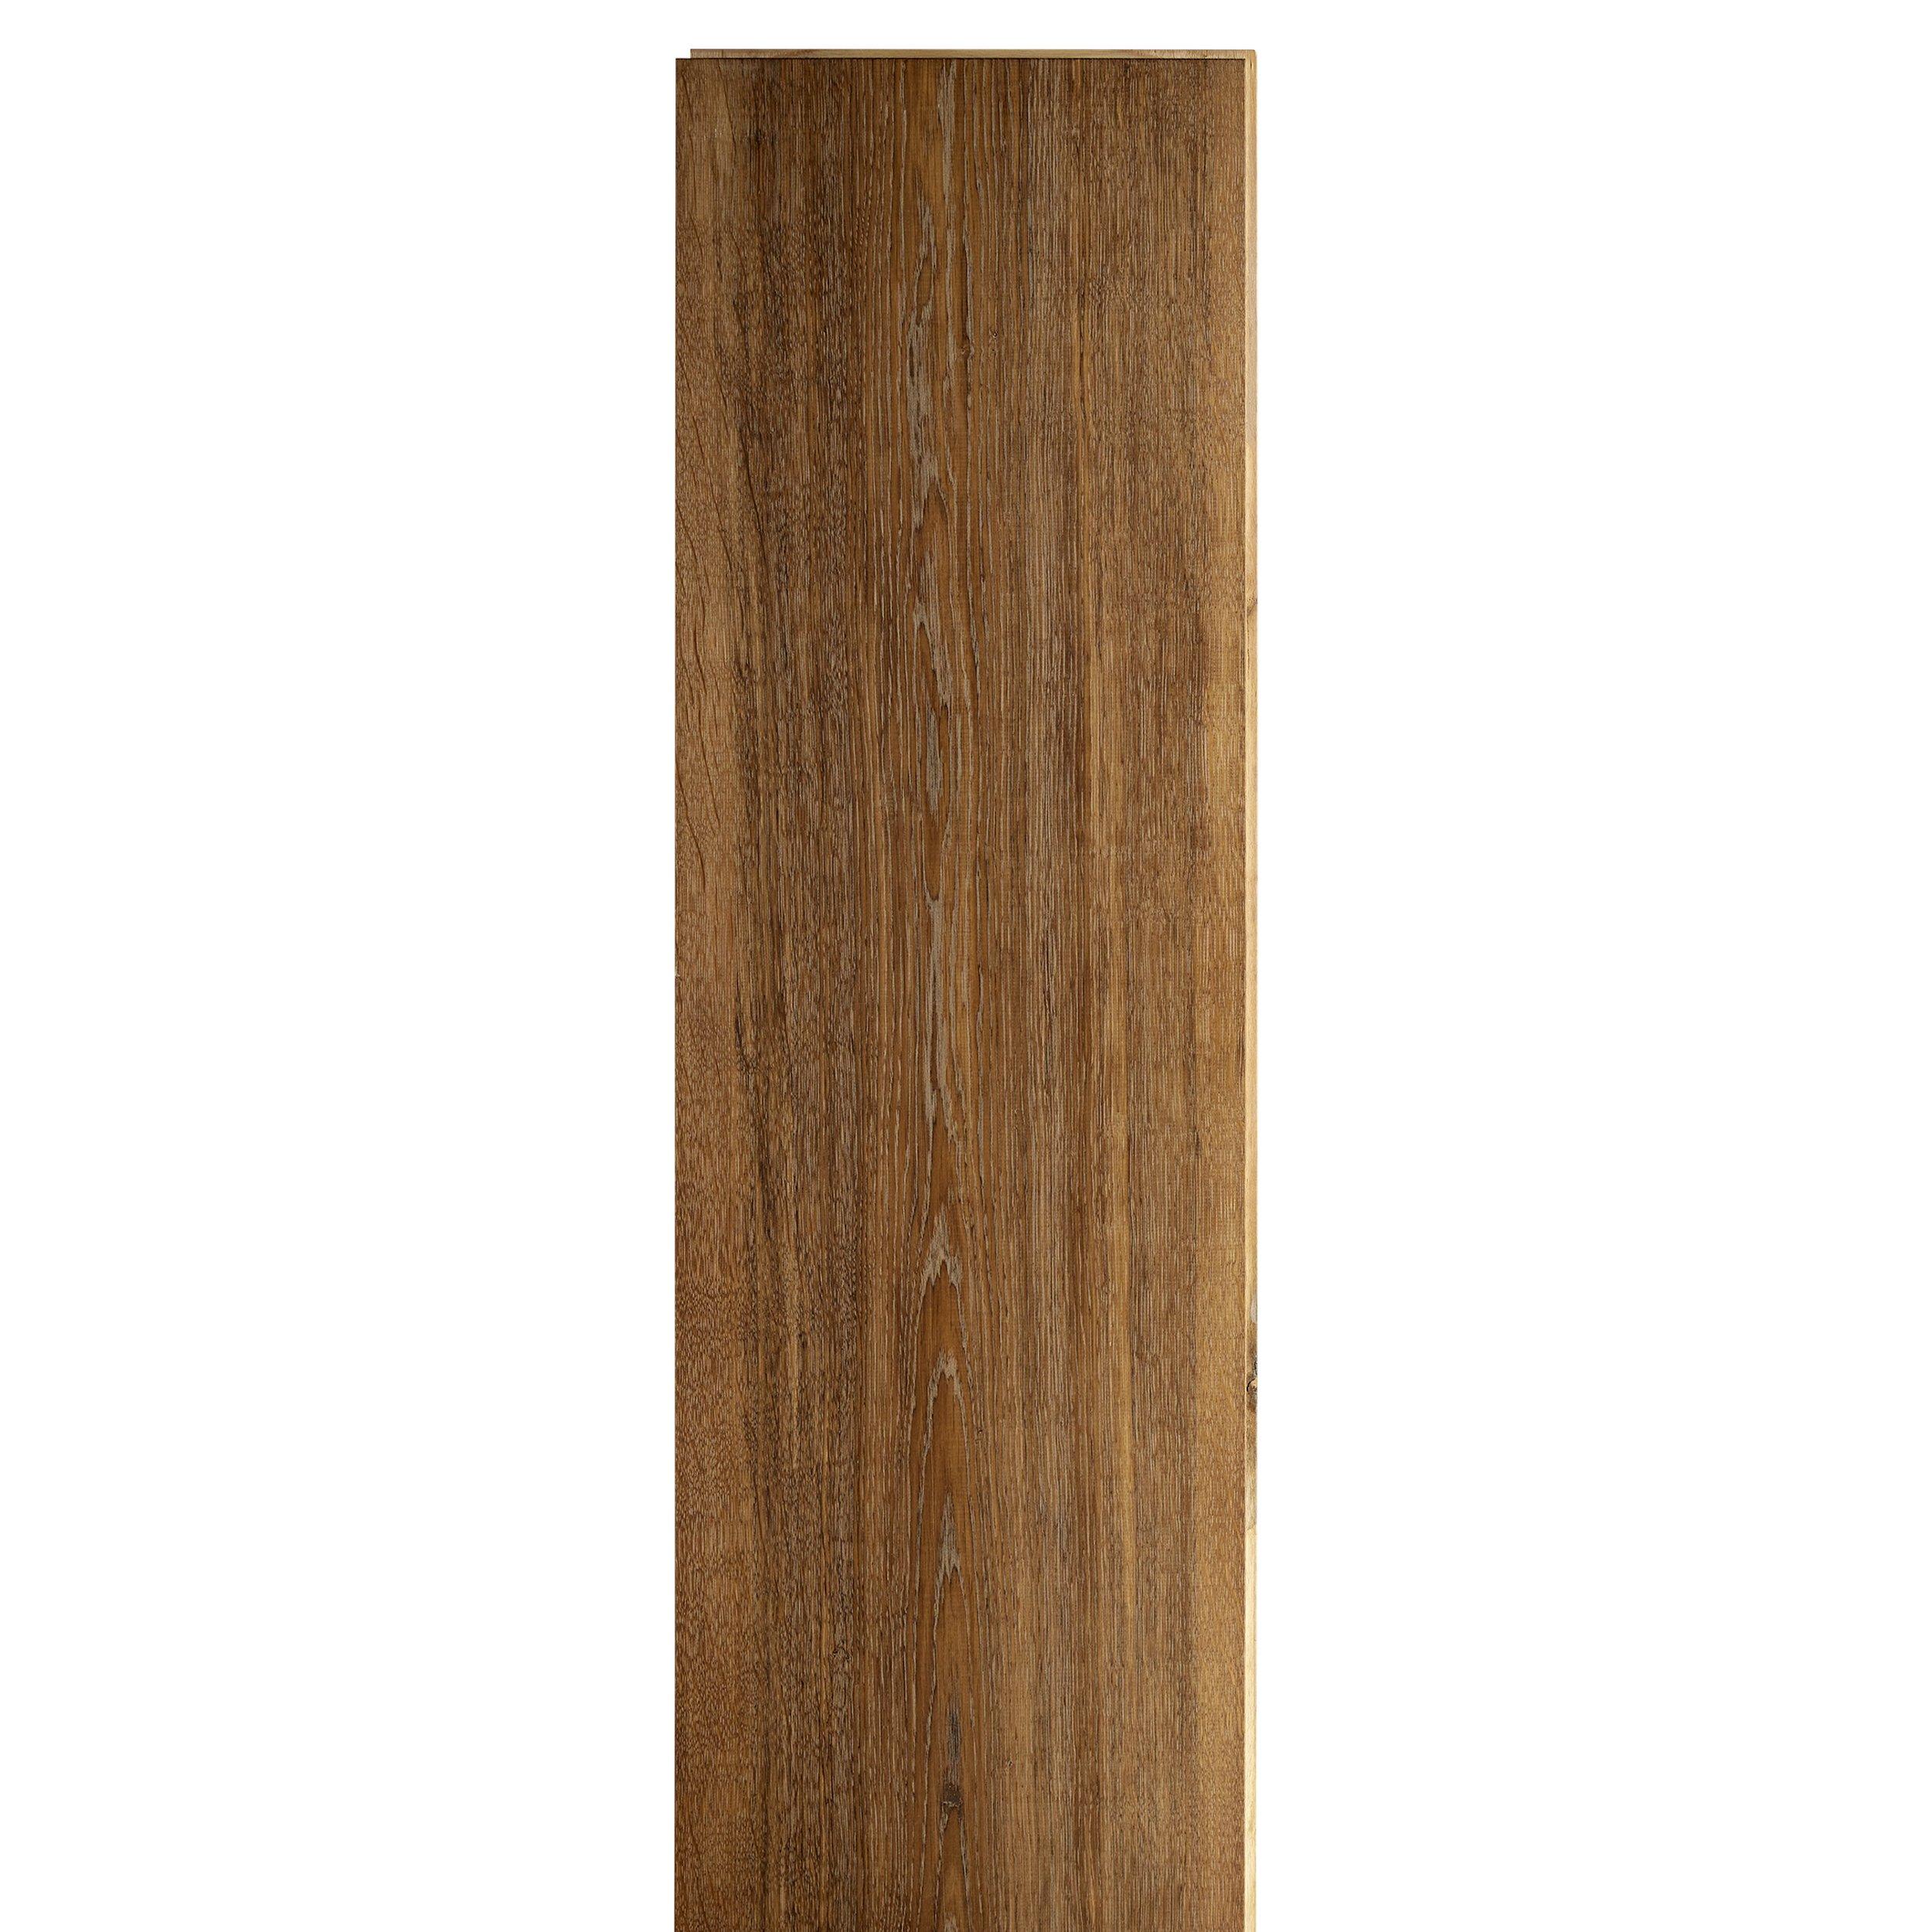 Remington Clove White Oak Distressed Engineered Hardwood